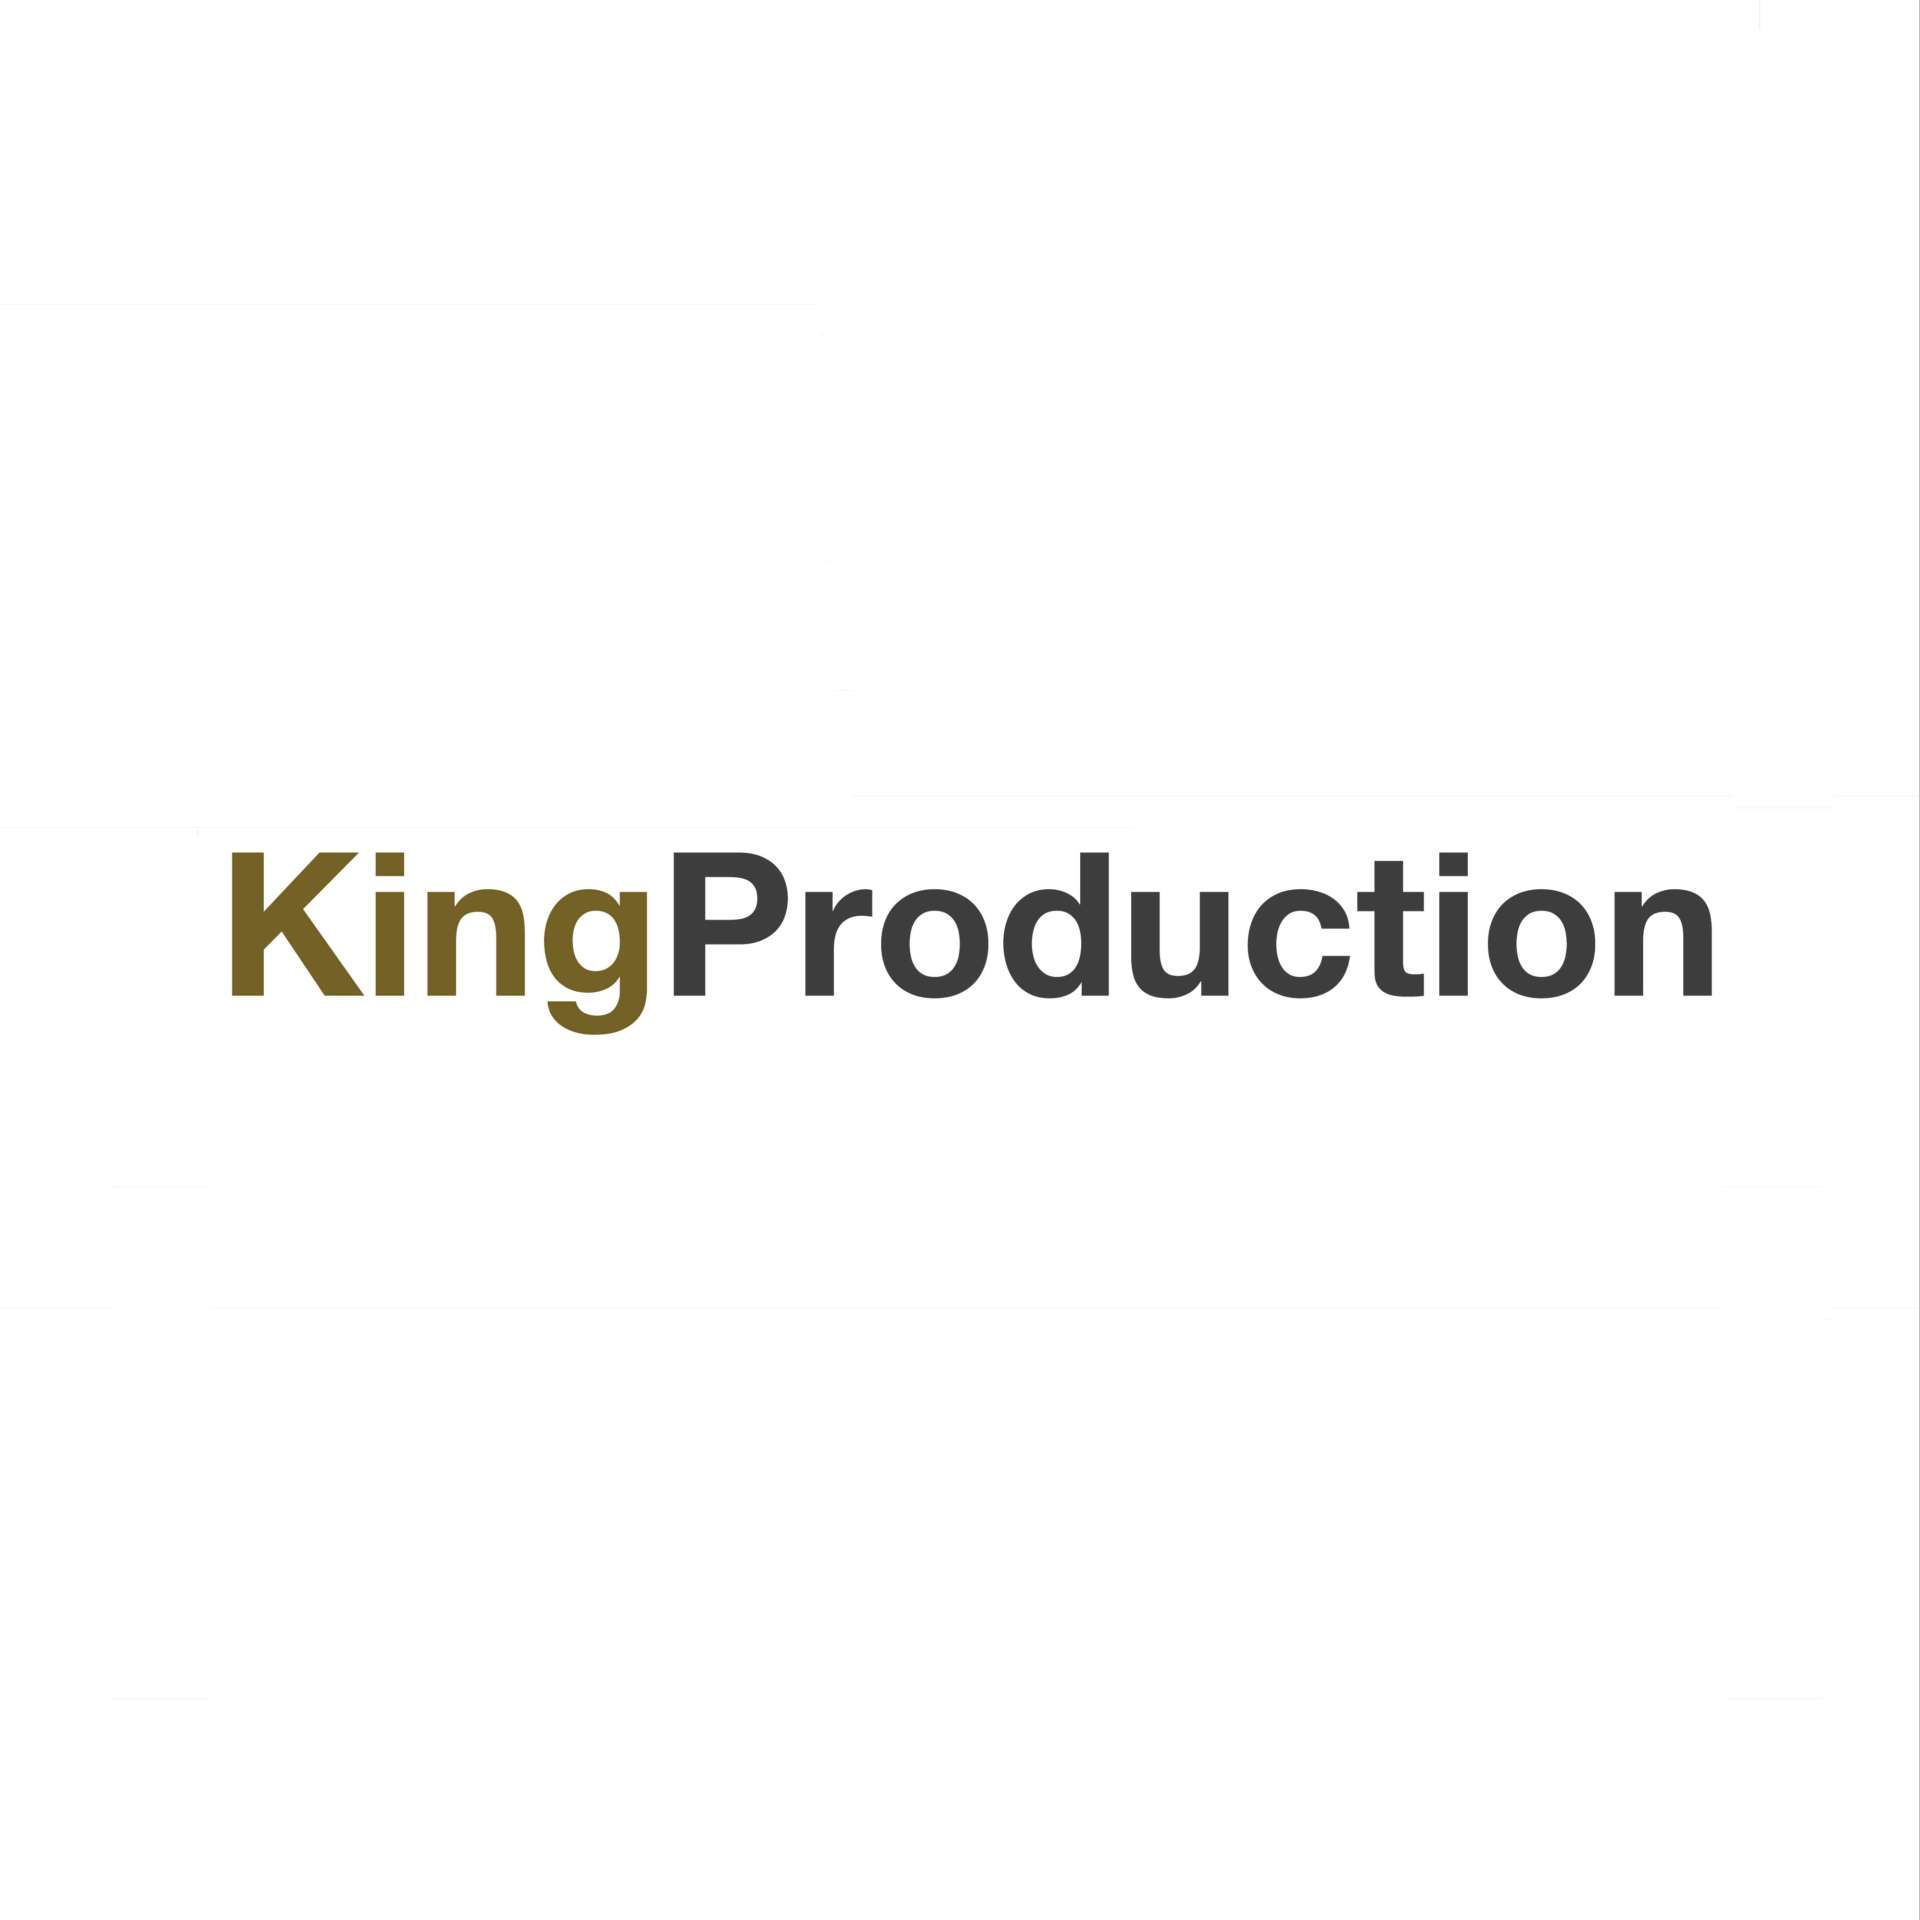 KingProduction